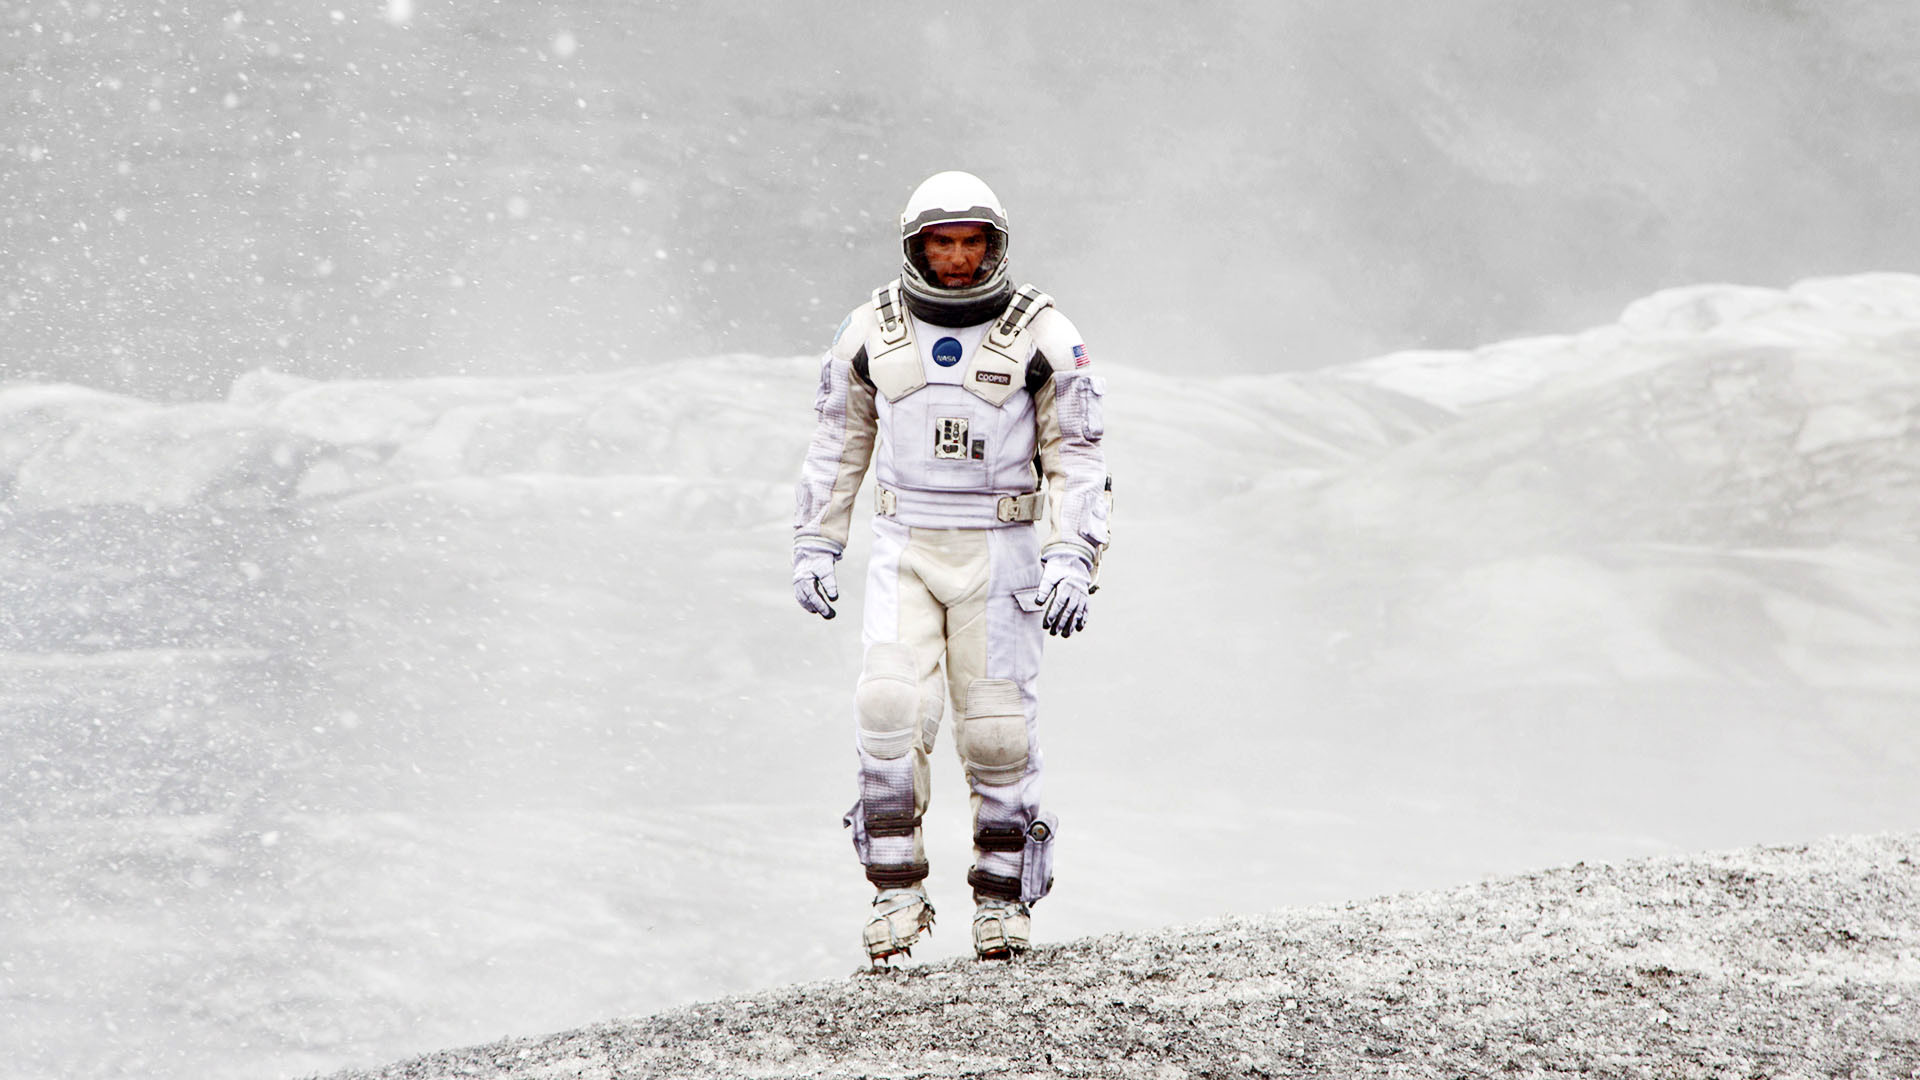 1920x1080 Interstellar, Cooper exploring, wearing space suit  wallpaper